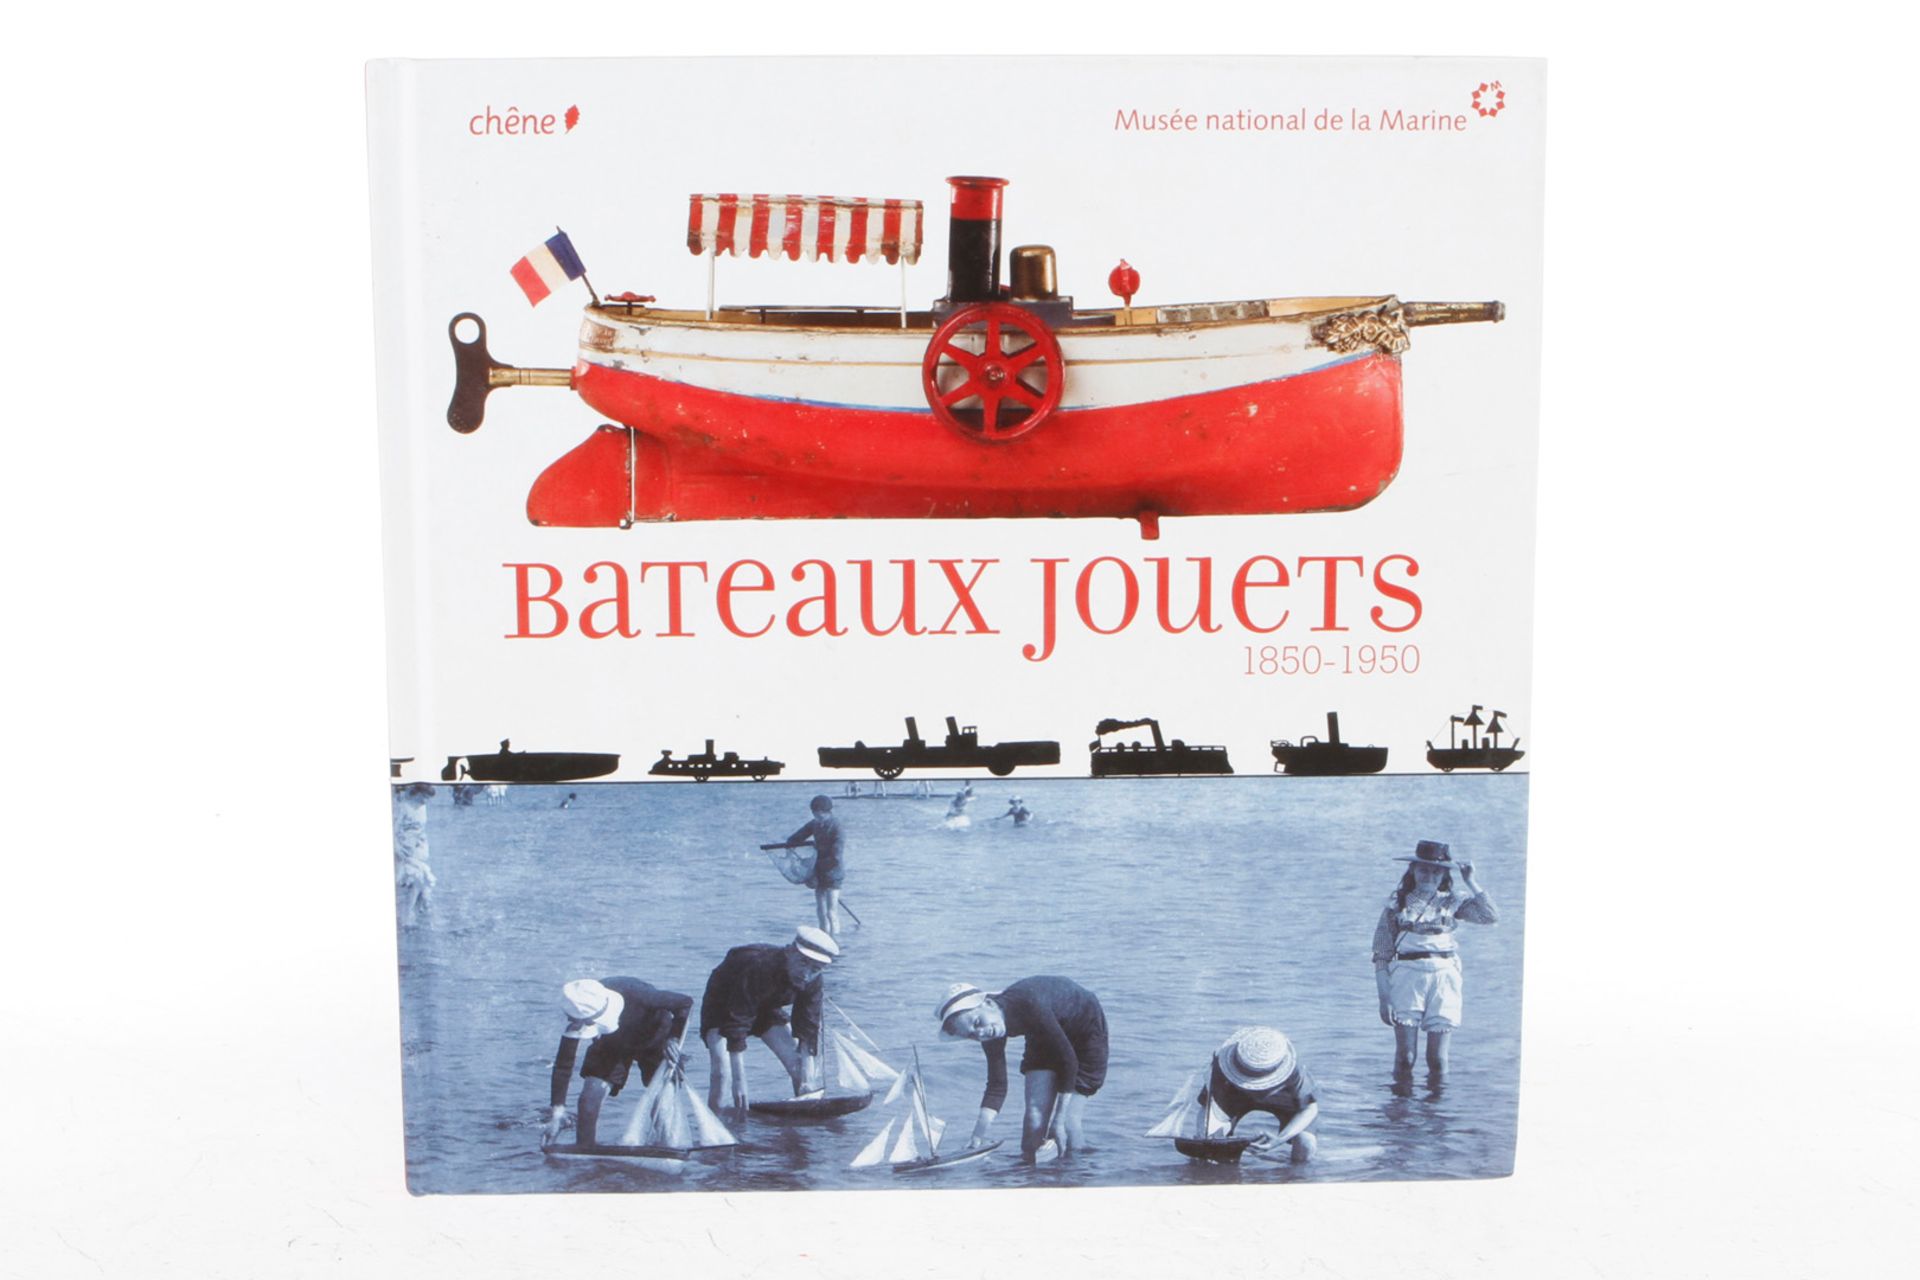 Buch ”Bateaux Jouets 1850-1950”, Alterungsspuren